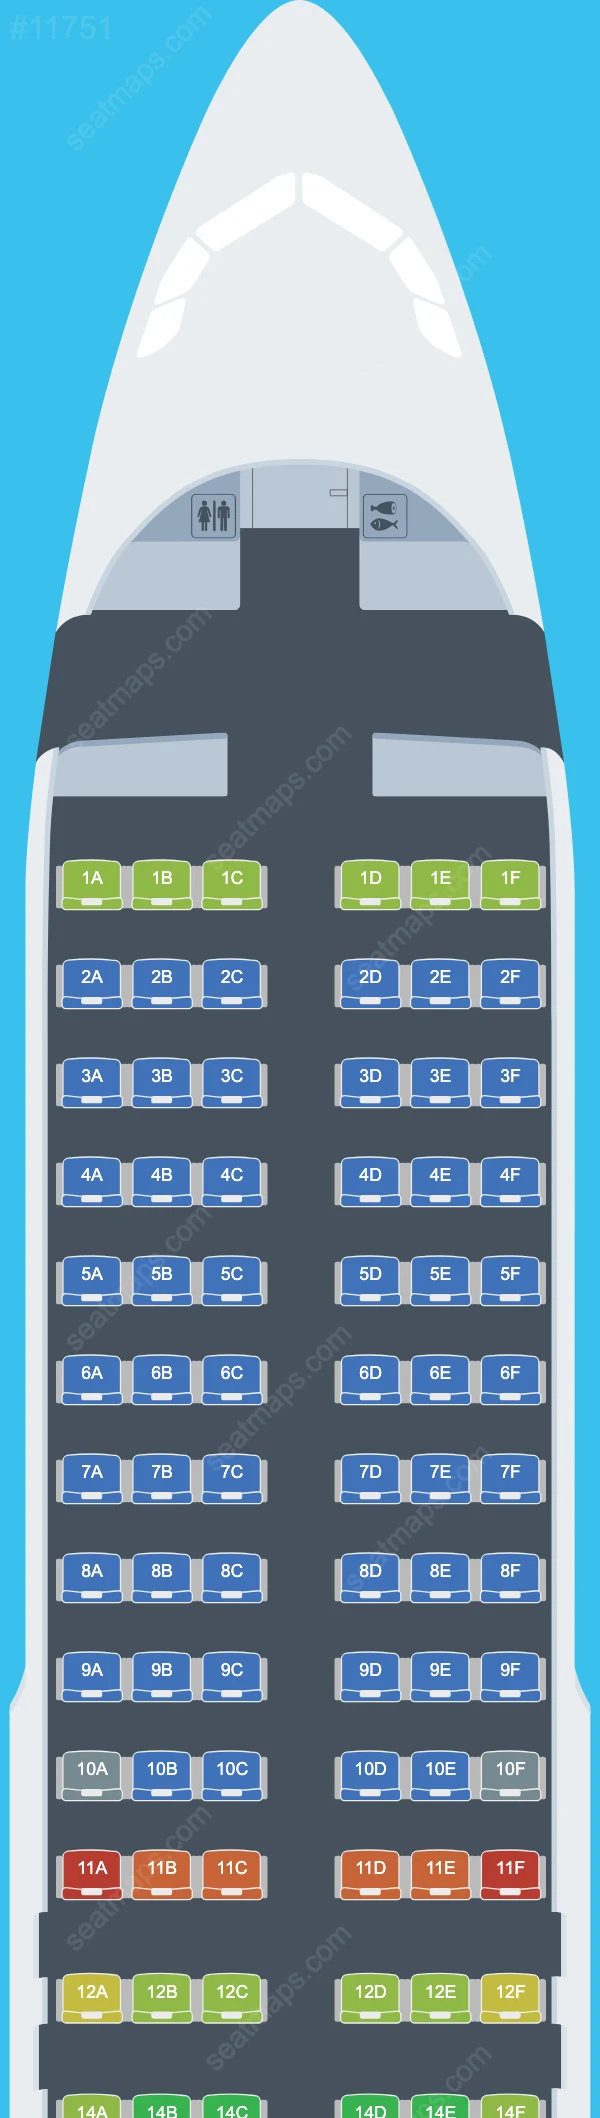 Схема салонов JetSMART Colombia в самолетах Airbus A320neo A320neo